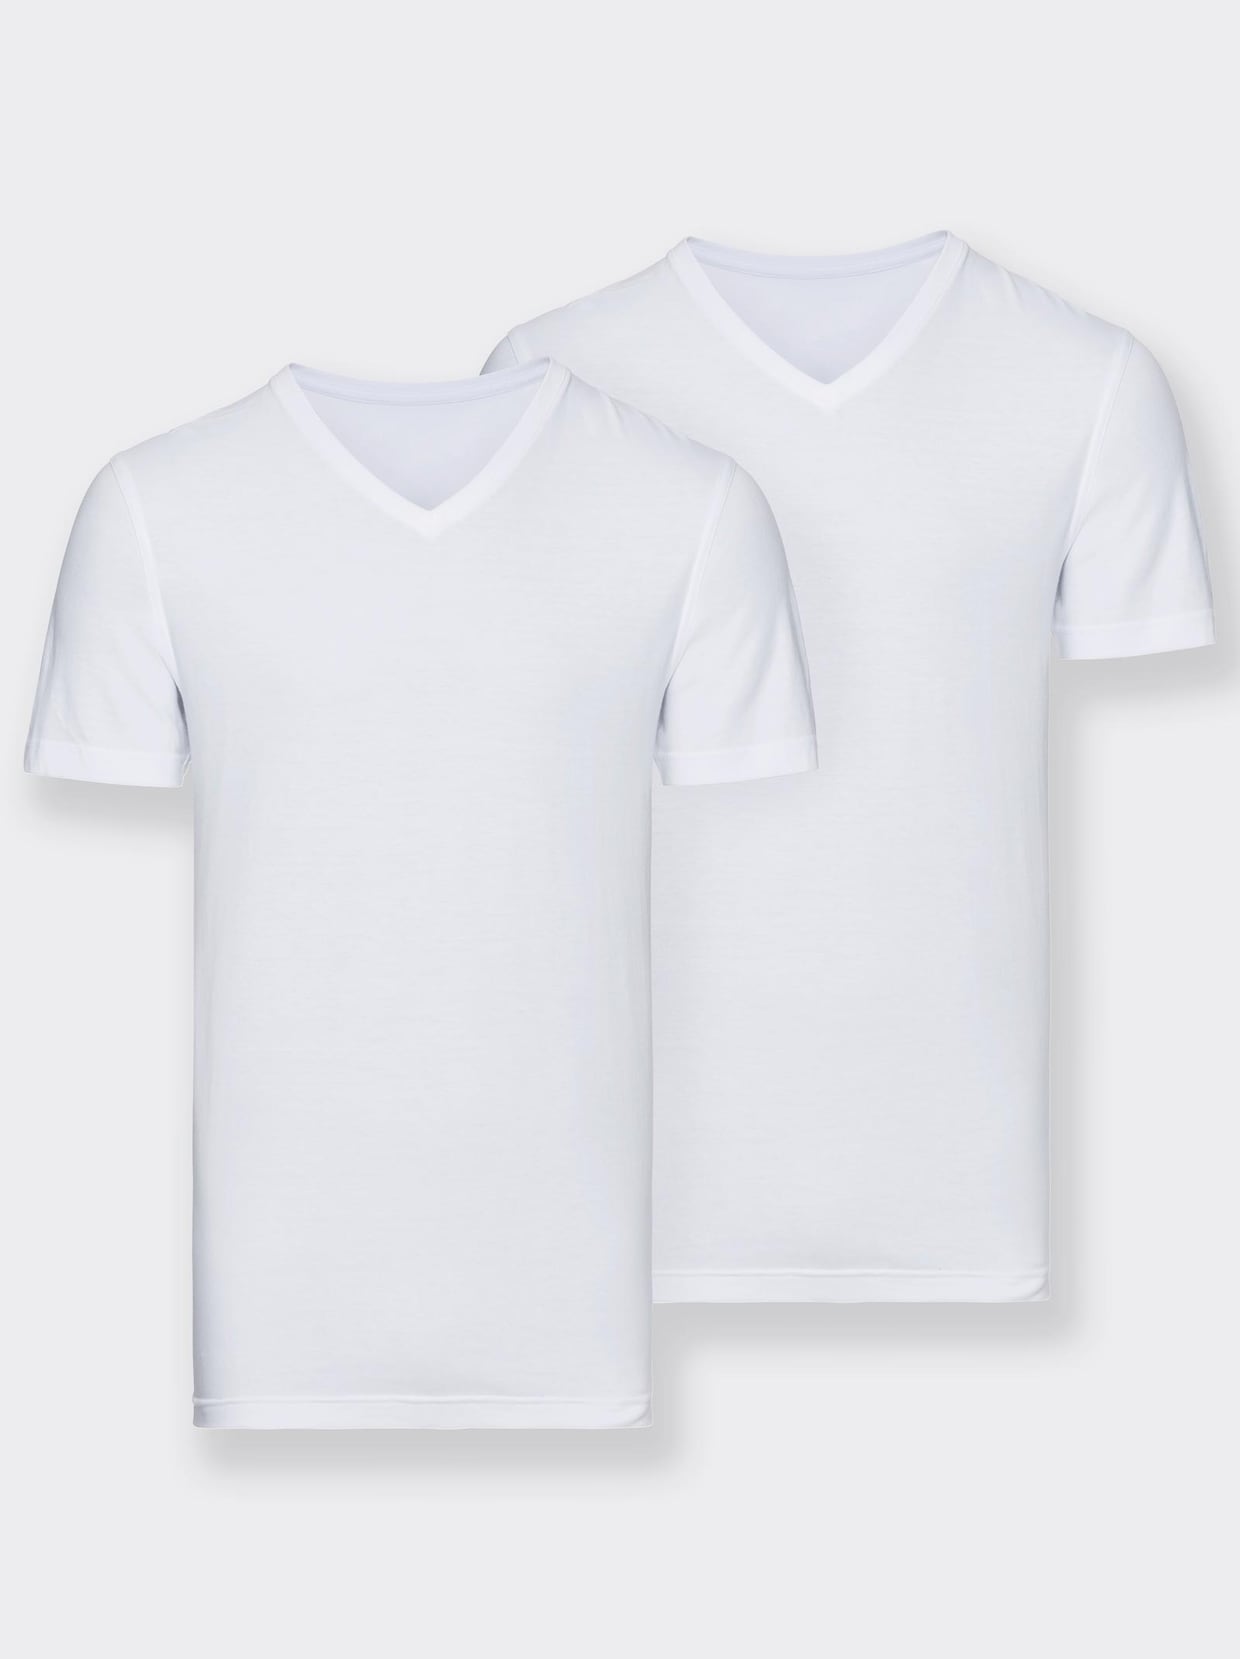 bugatti Shirt - 2 Stück weiß